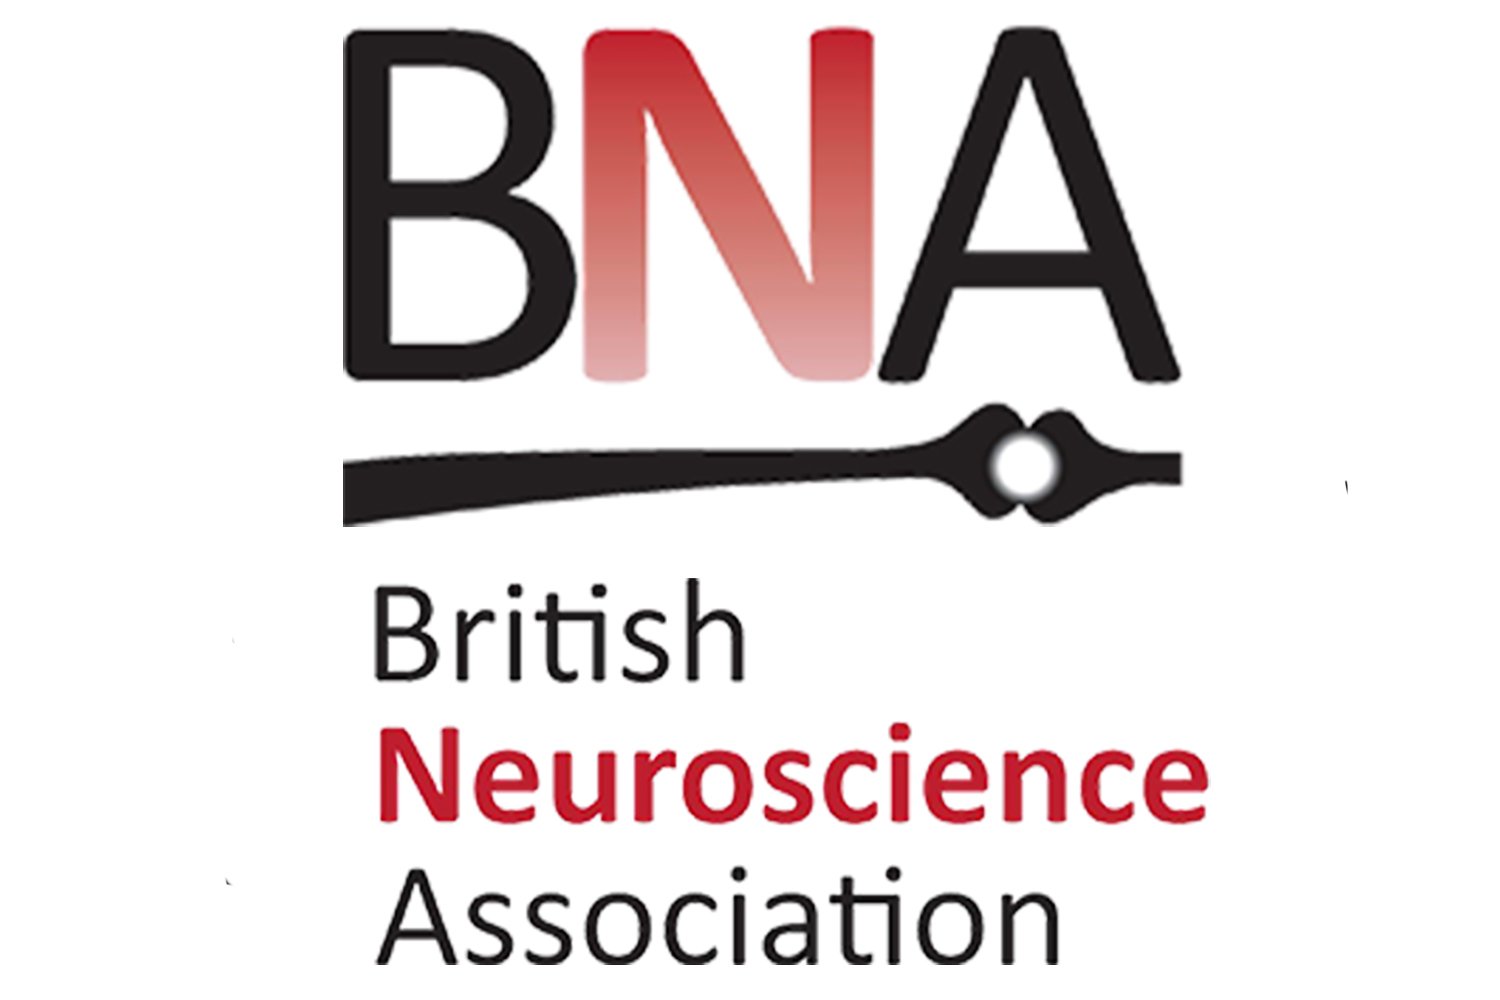 Dr Miguel Toribio-Mateas British Neuroscience Association Member copy.jpg (Copy) (Copy)